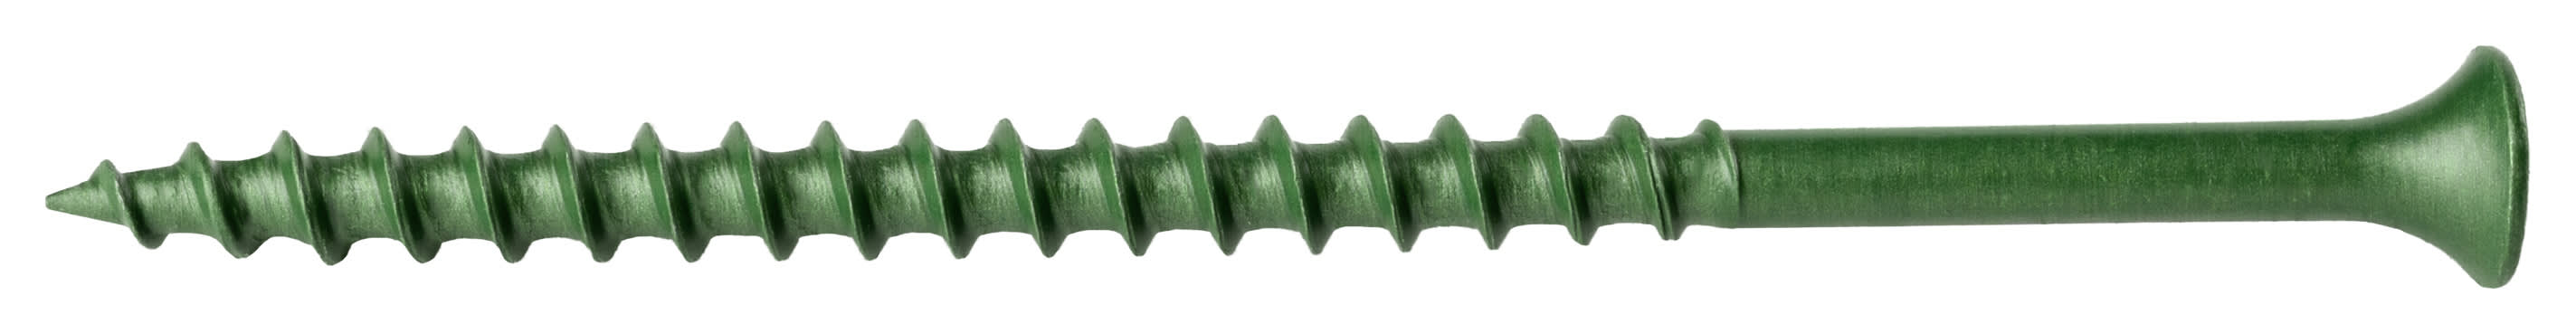 Wickes Exterior Grade Green Screws - 5 x